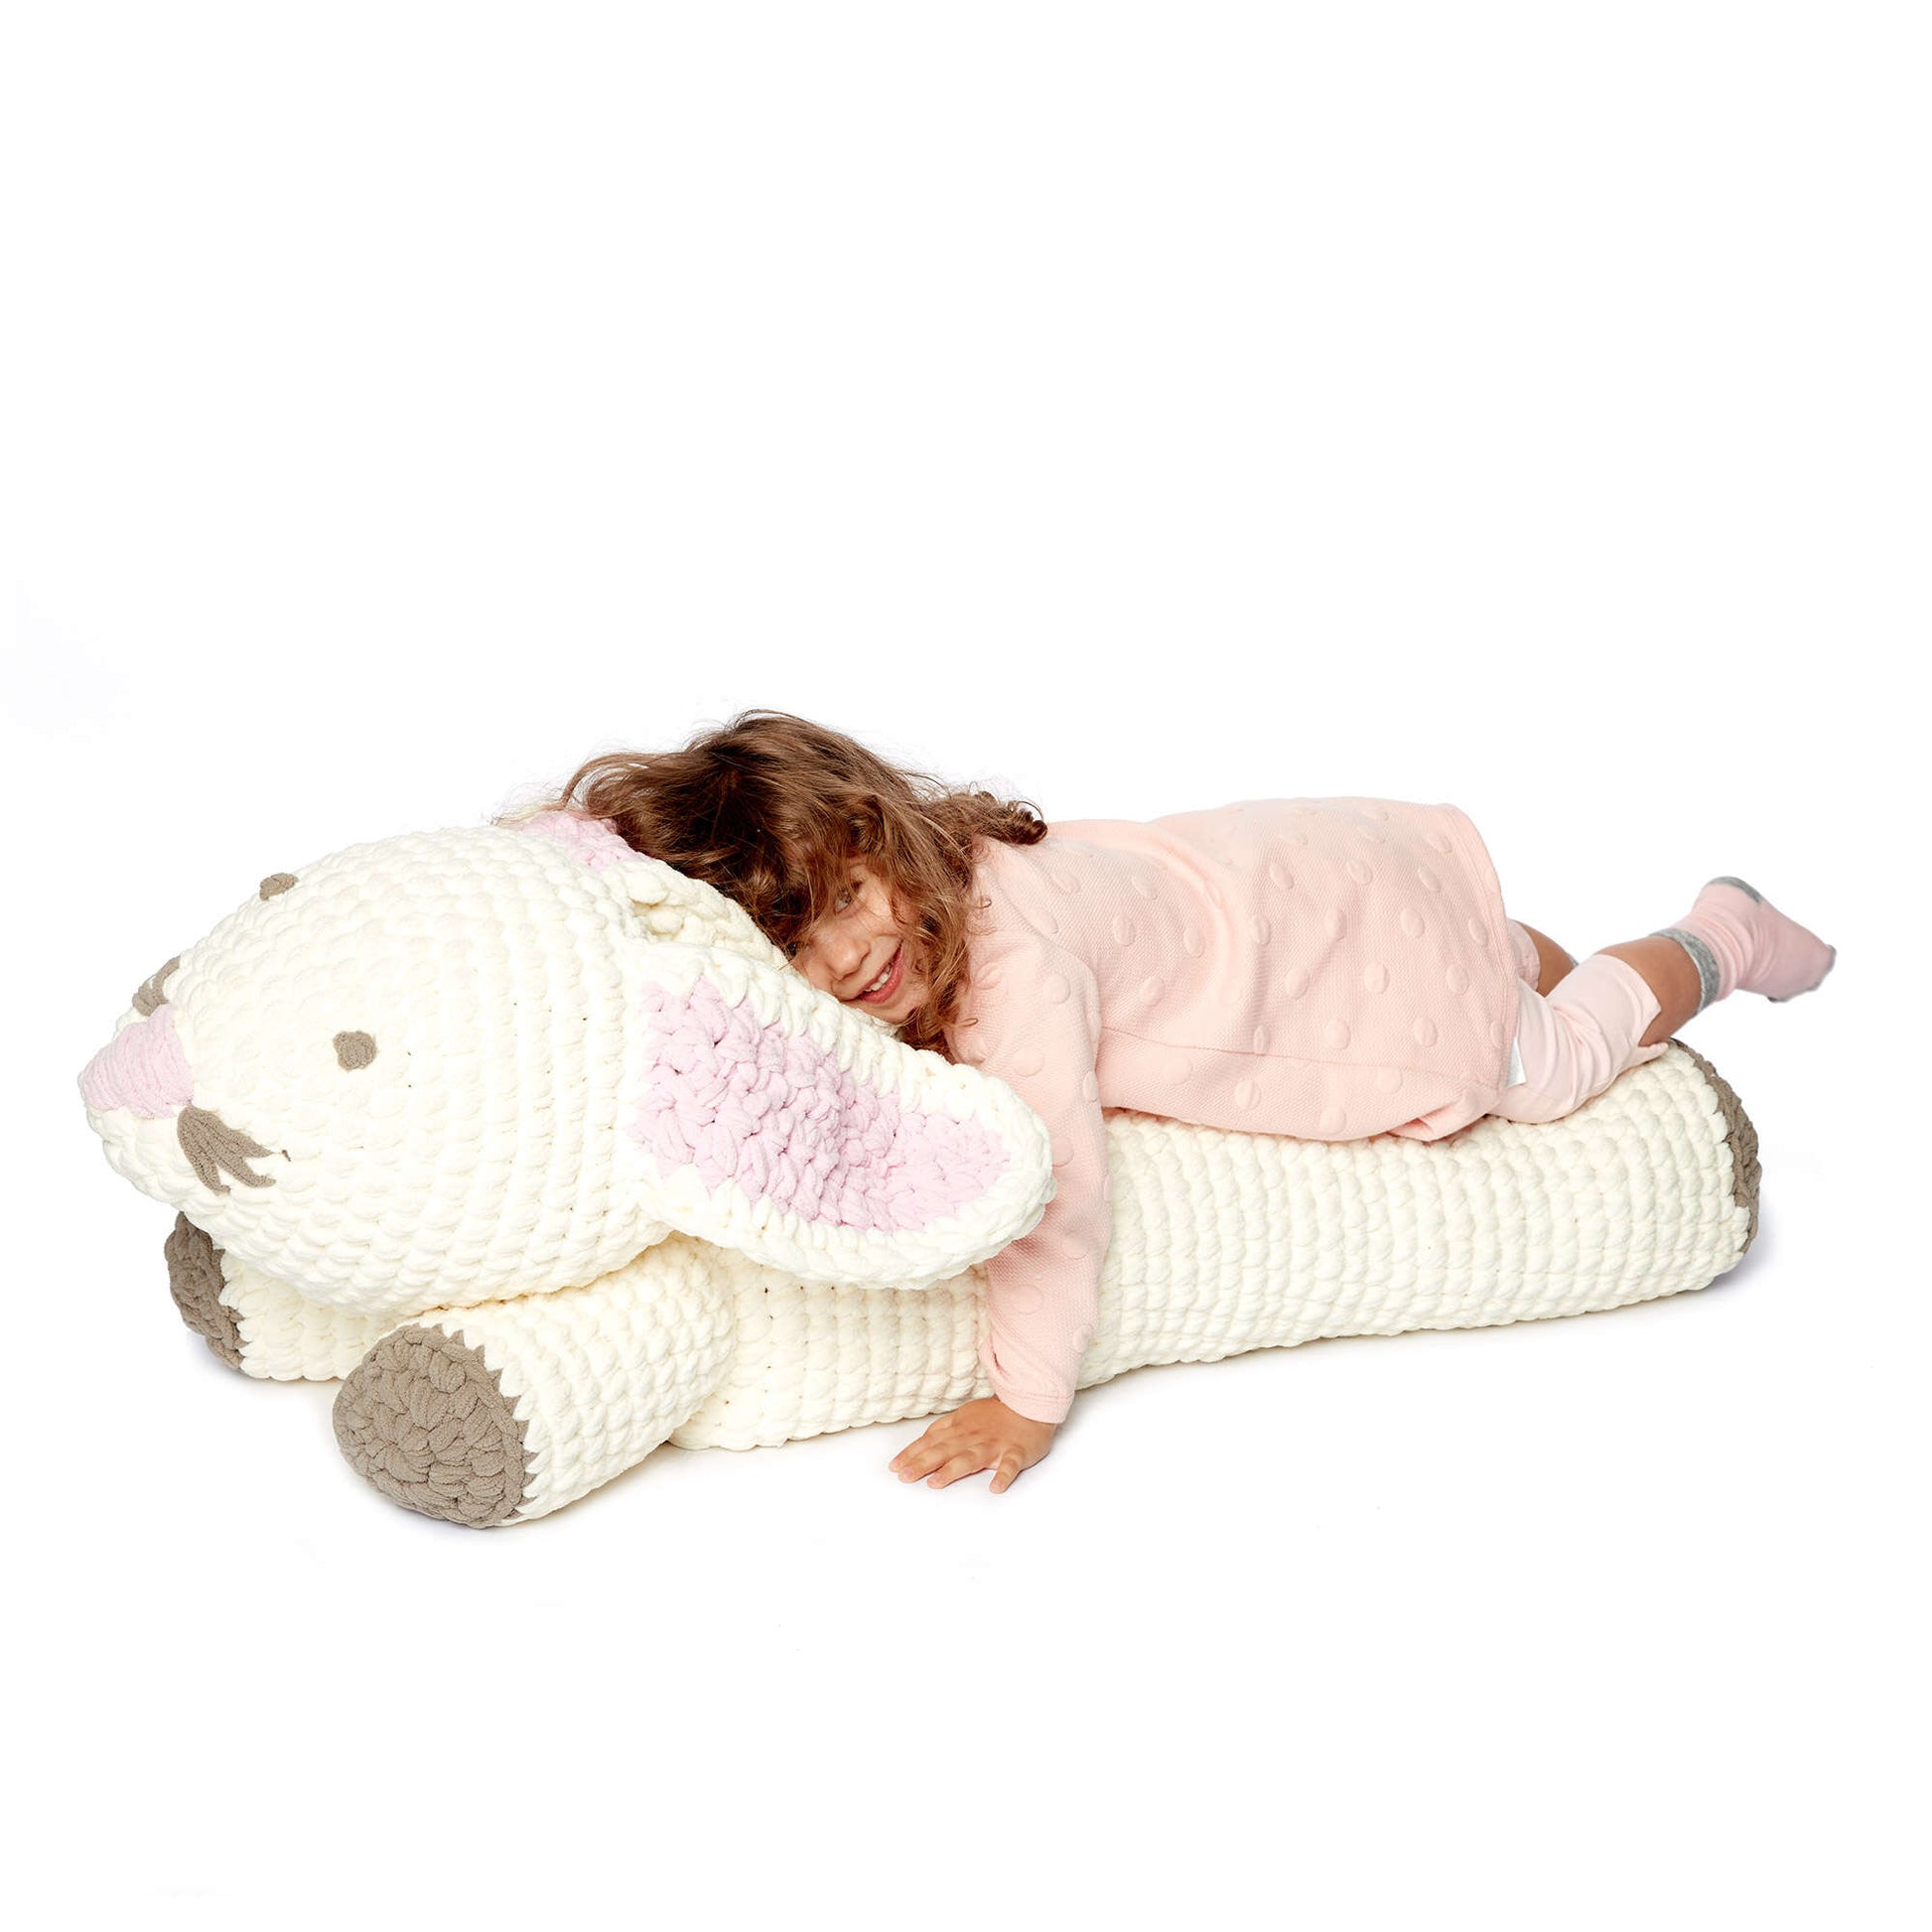 Bernat Crochet Bunny Floor Pillow Crochet Pillow made in Bernat Baby Blanket yarn